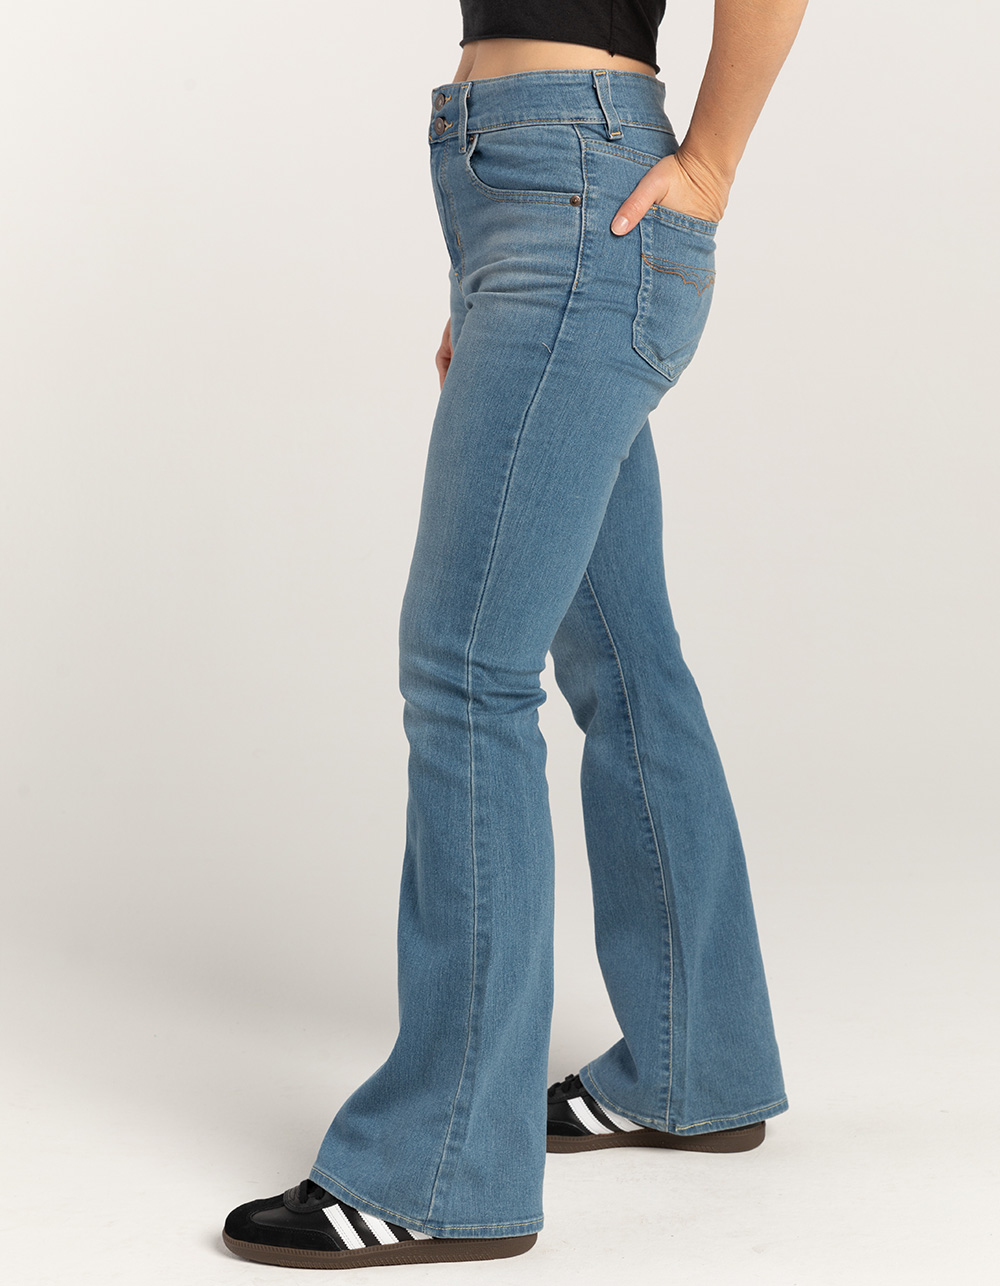 LEVI'S 726 Western Flare Womens Jeans - Camp Denim - MEDIUM STONE | Tillys